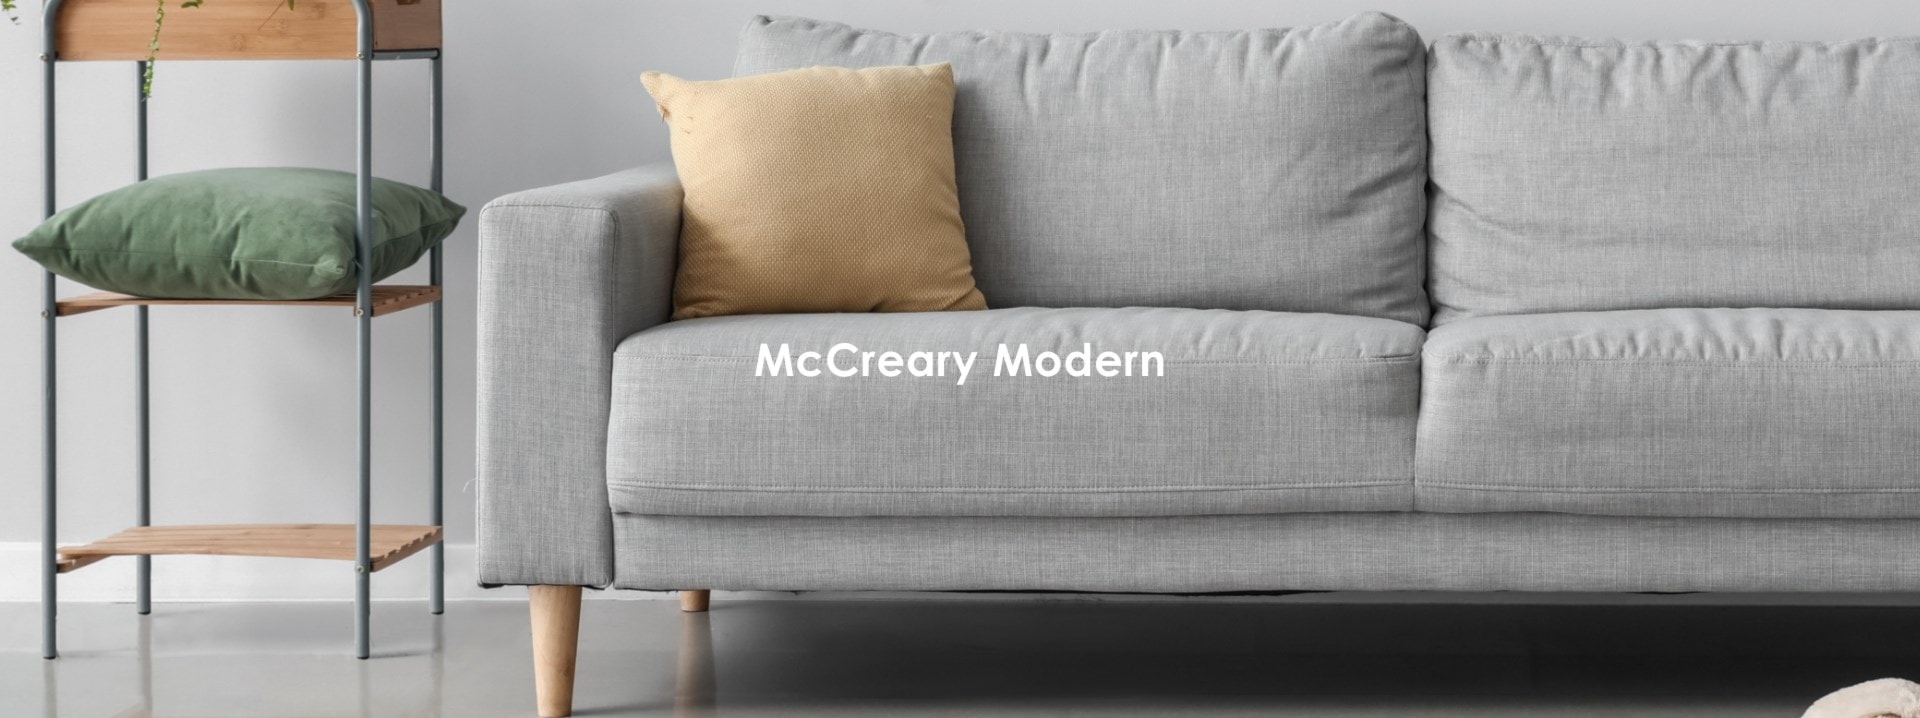 McCreary Modern